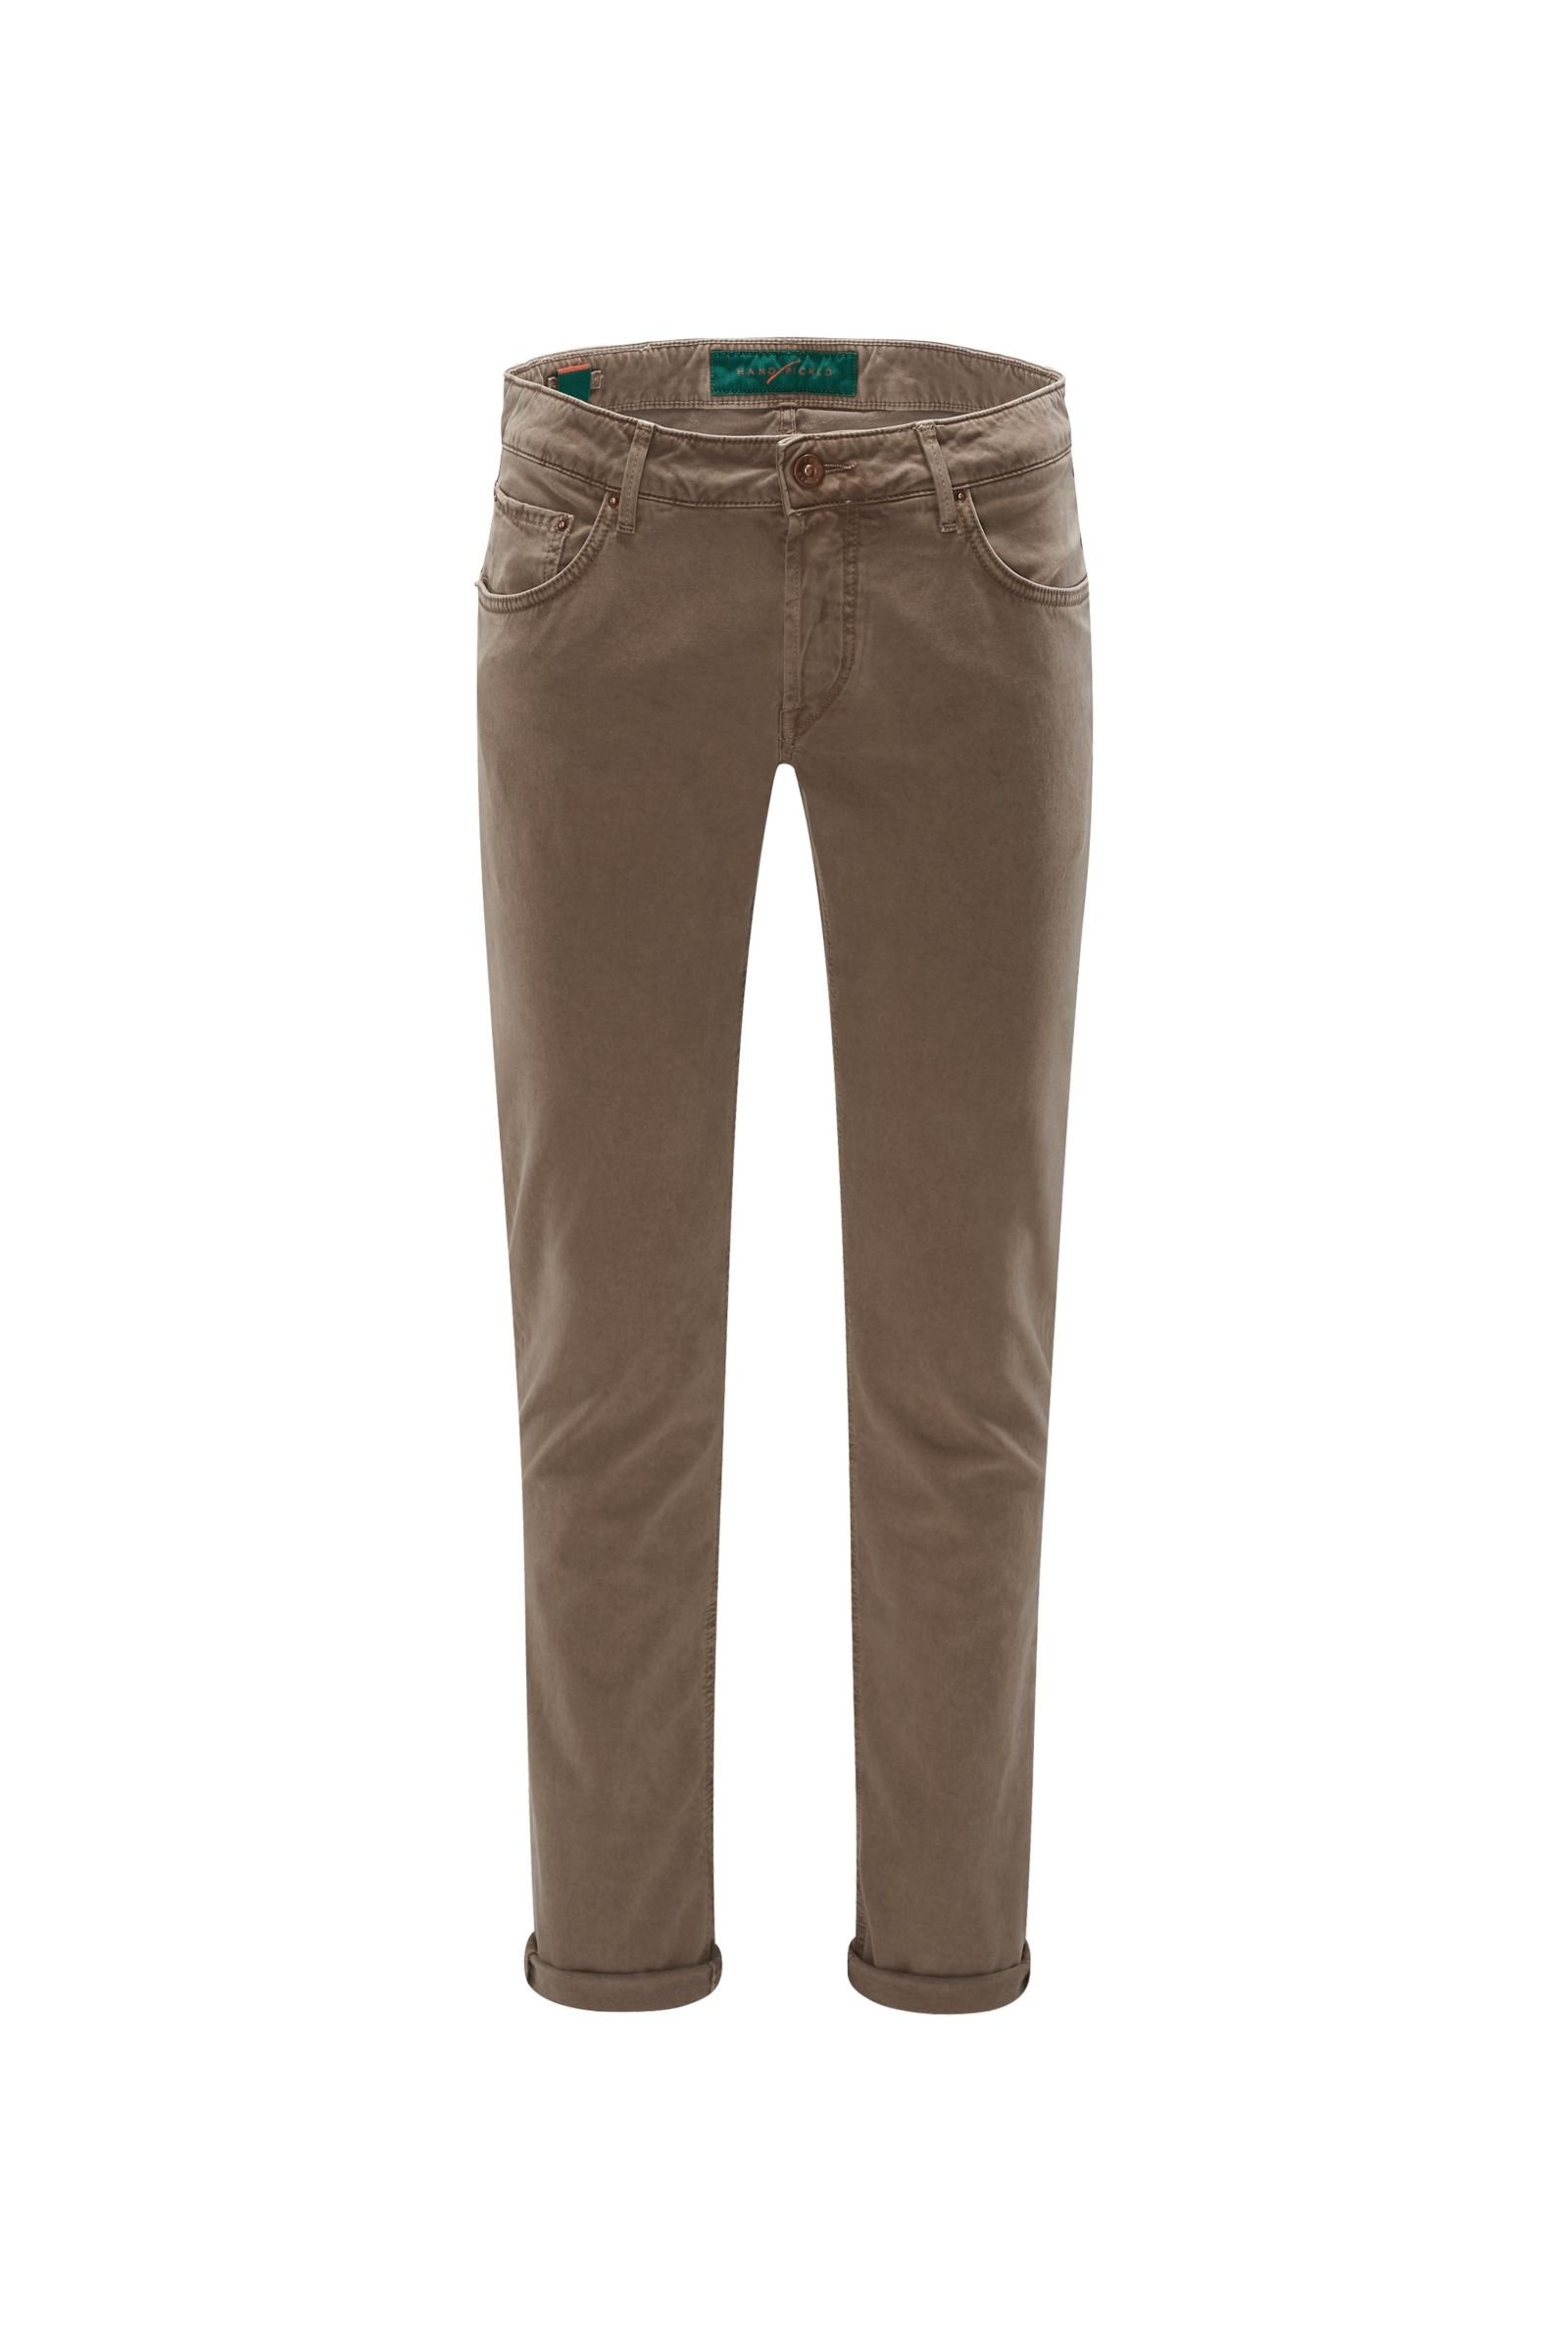 Cotton trousers 'Orvieto' light brown